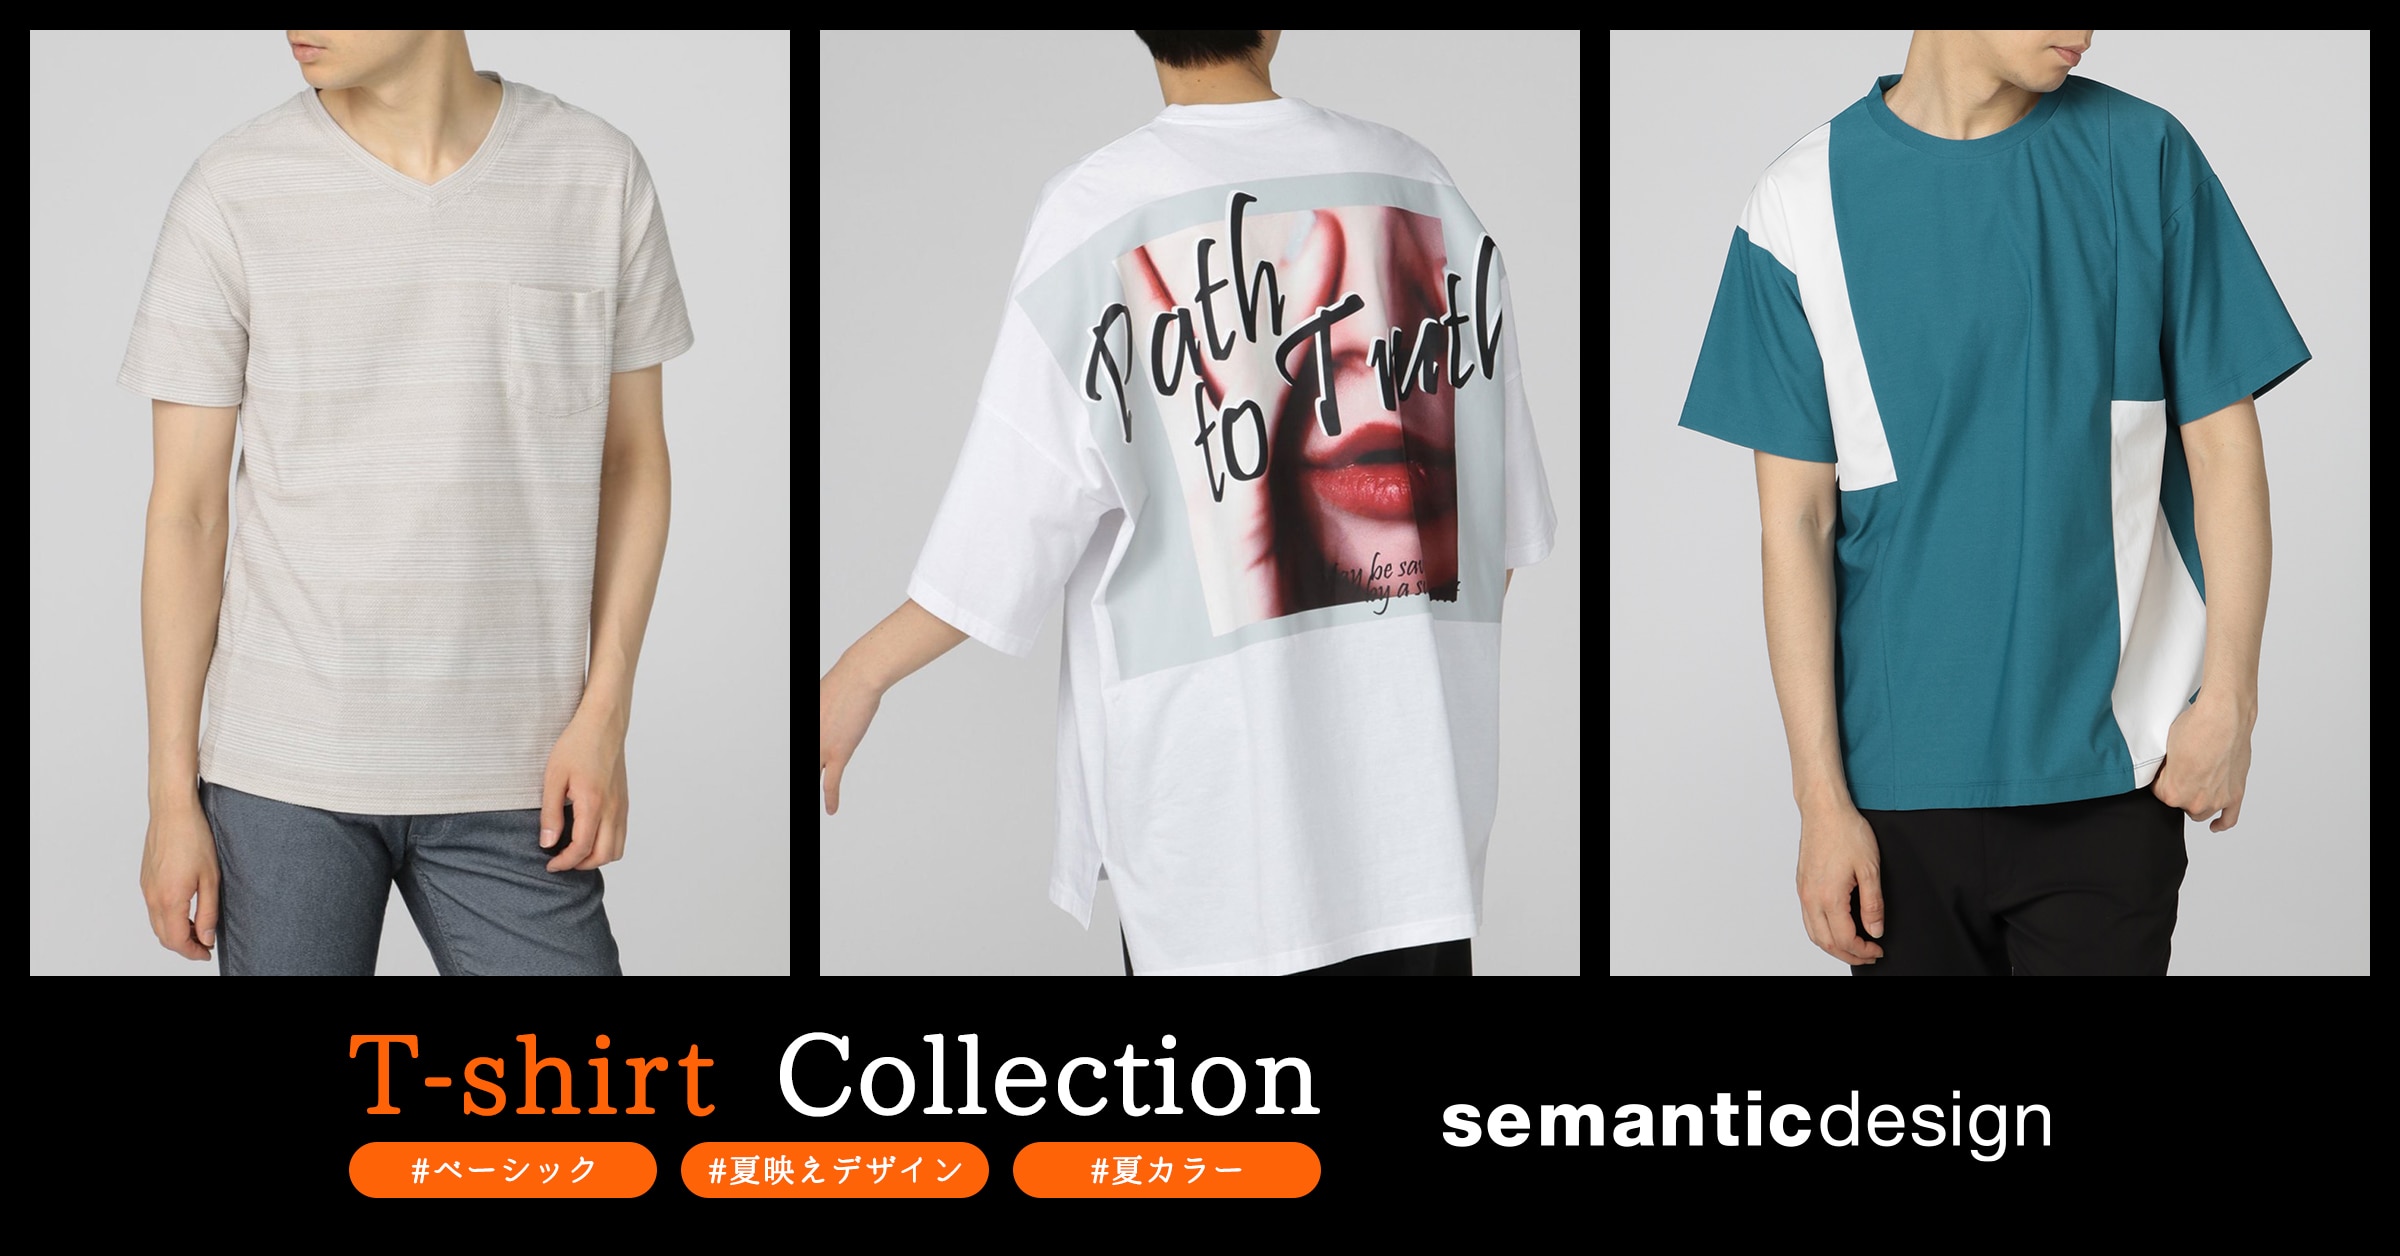 semanticdesign(セマンティックデザイン) 夏のTシャツコレクション